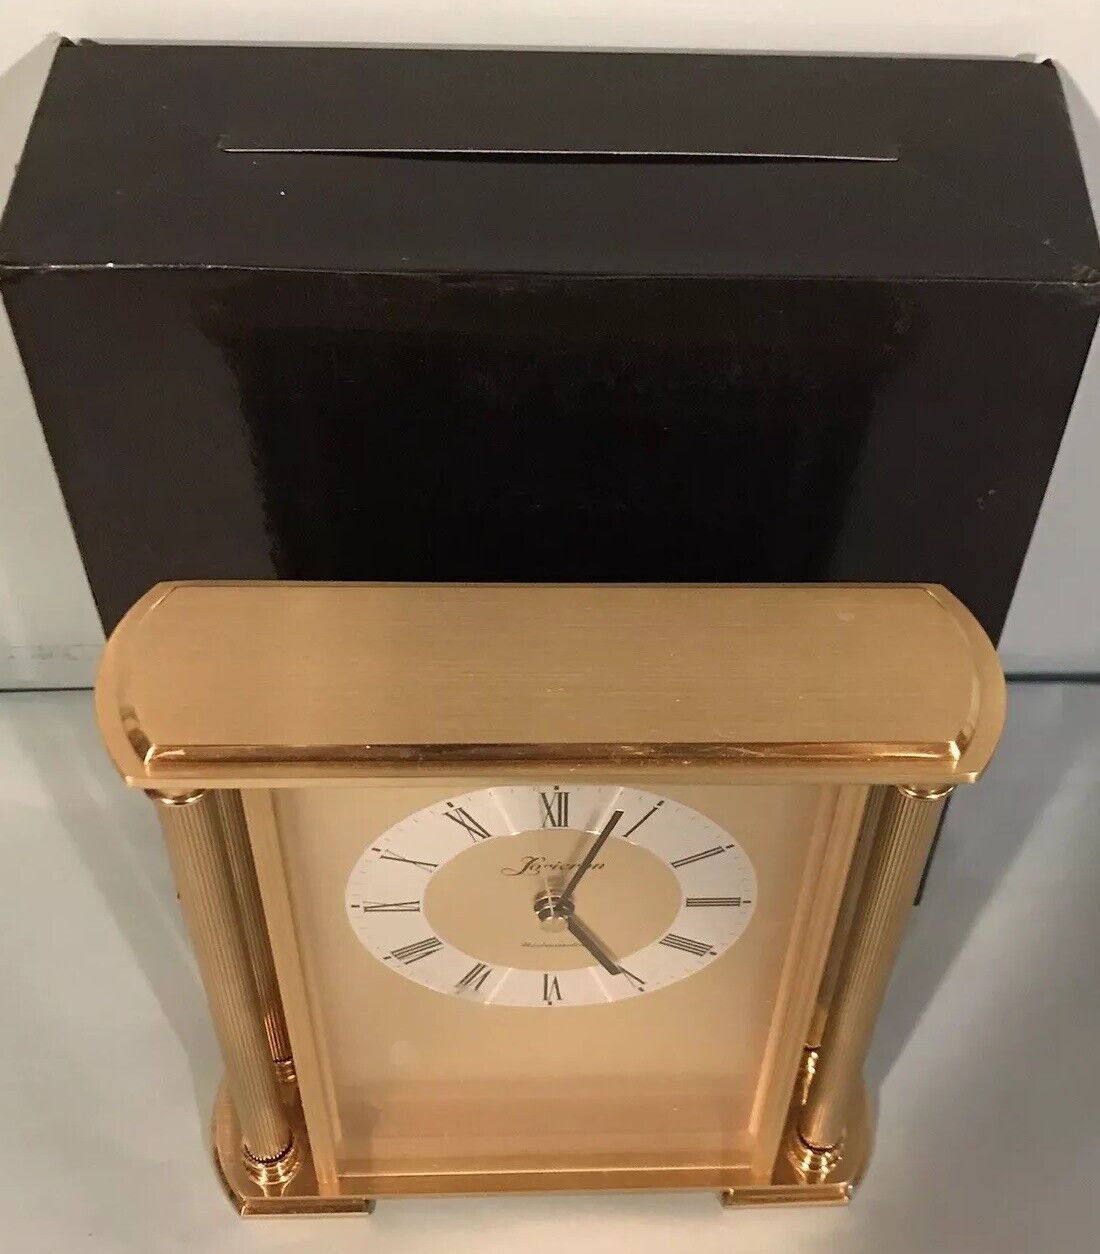 Loricron Clock Gold #396 Mantel Chimes Battery Operated Mint W/Box Paperwork